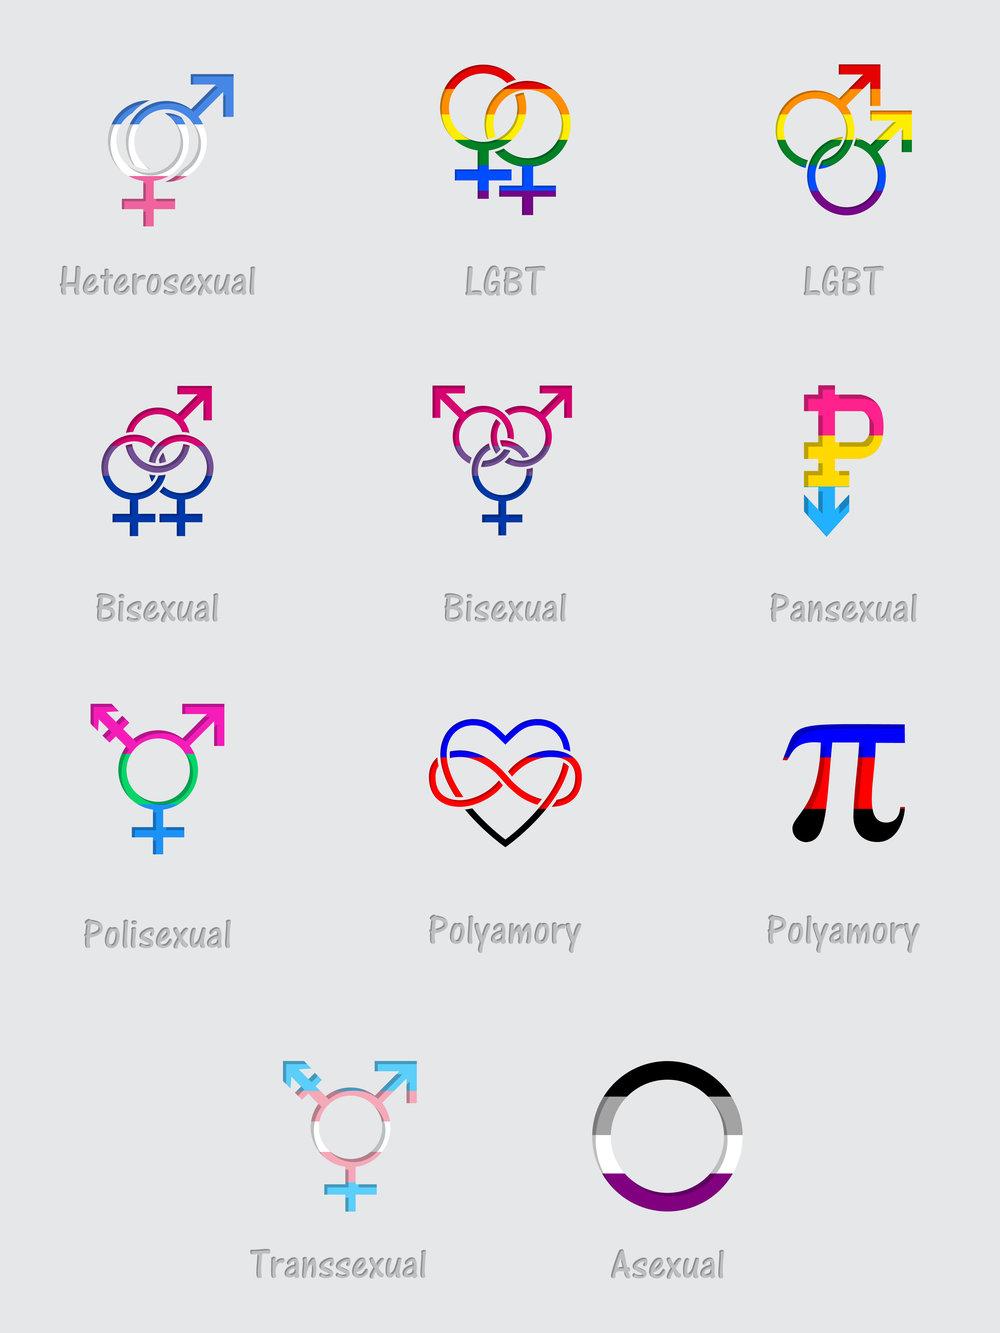 sexual orientation symbols flags